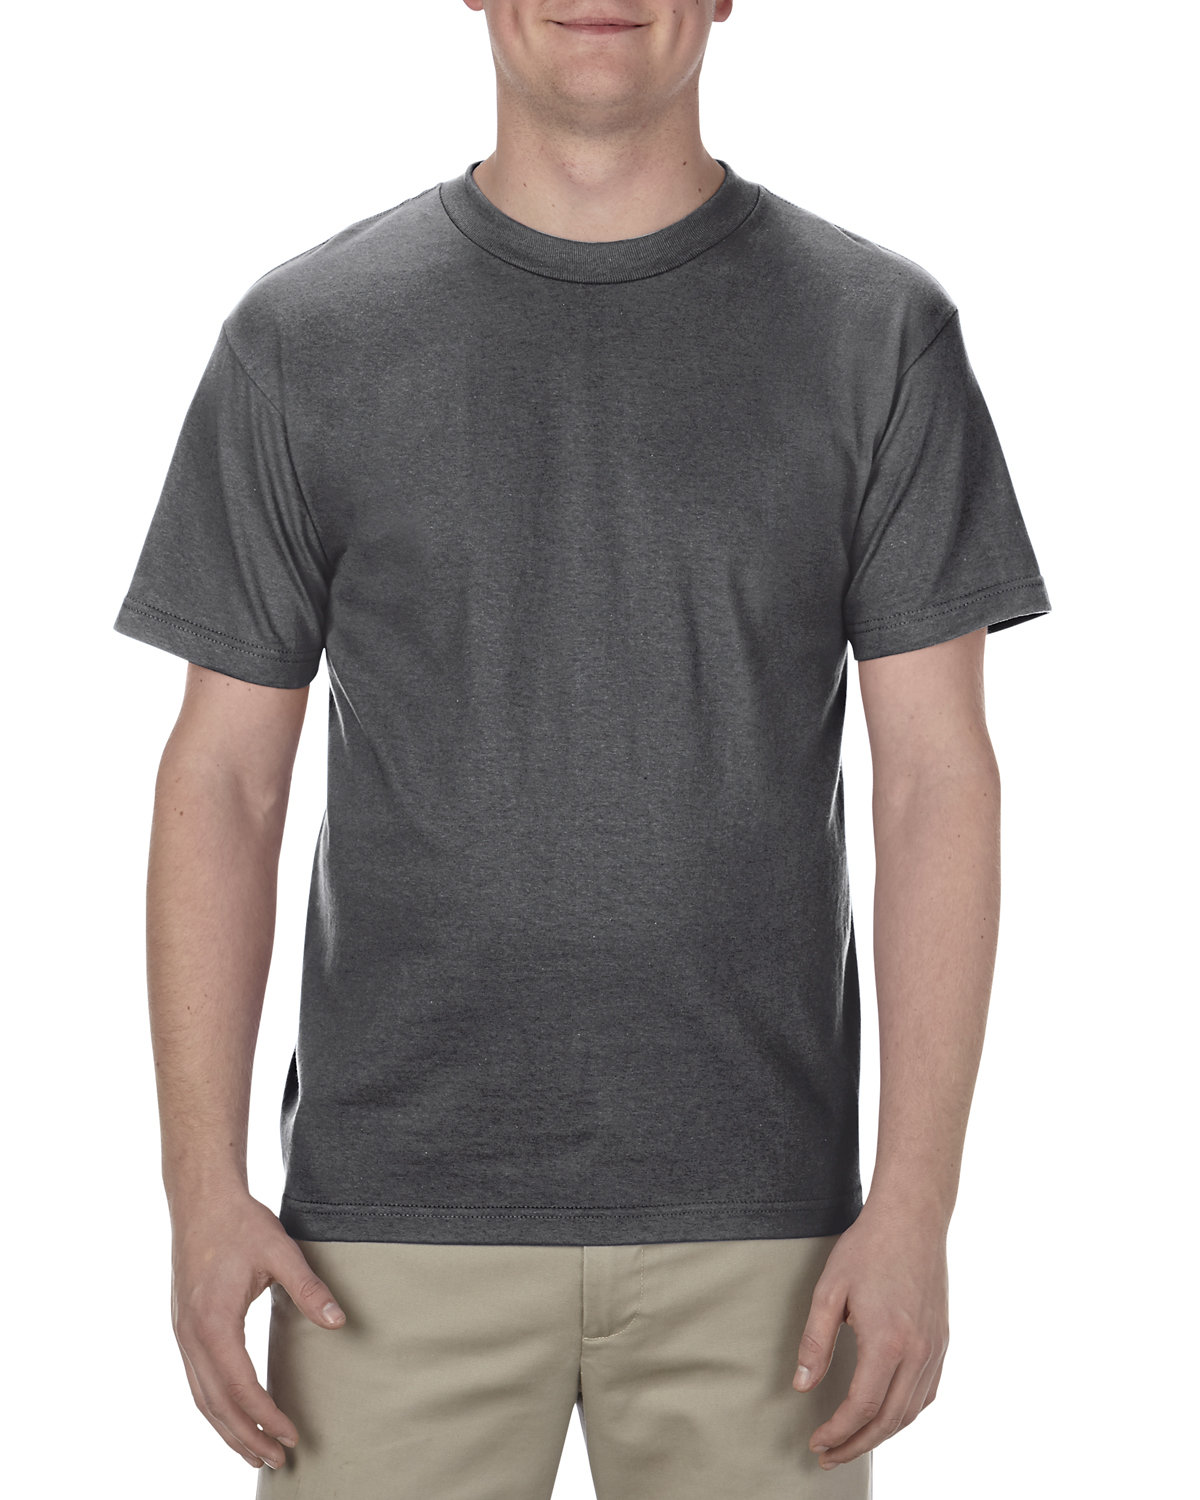 American Apparel Unisex Heavyweight Cotton T-Shirt heather charcoal 